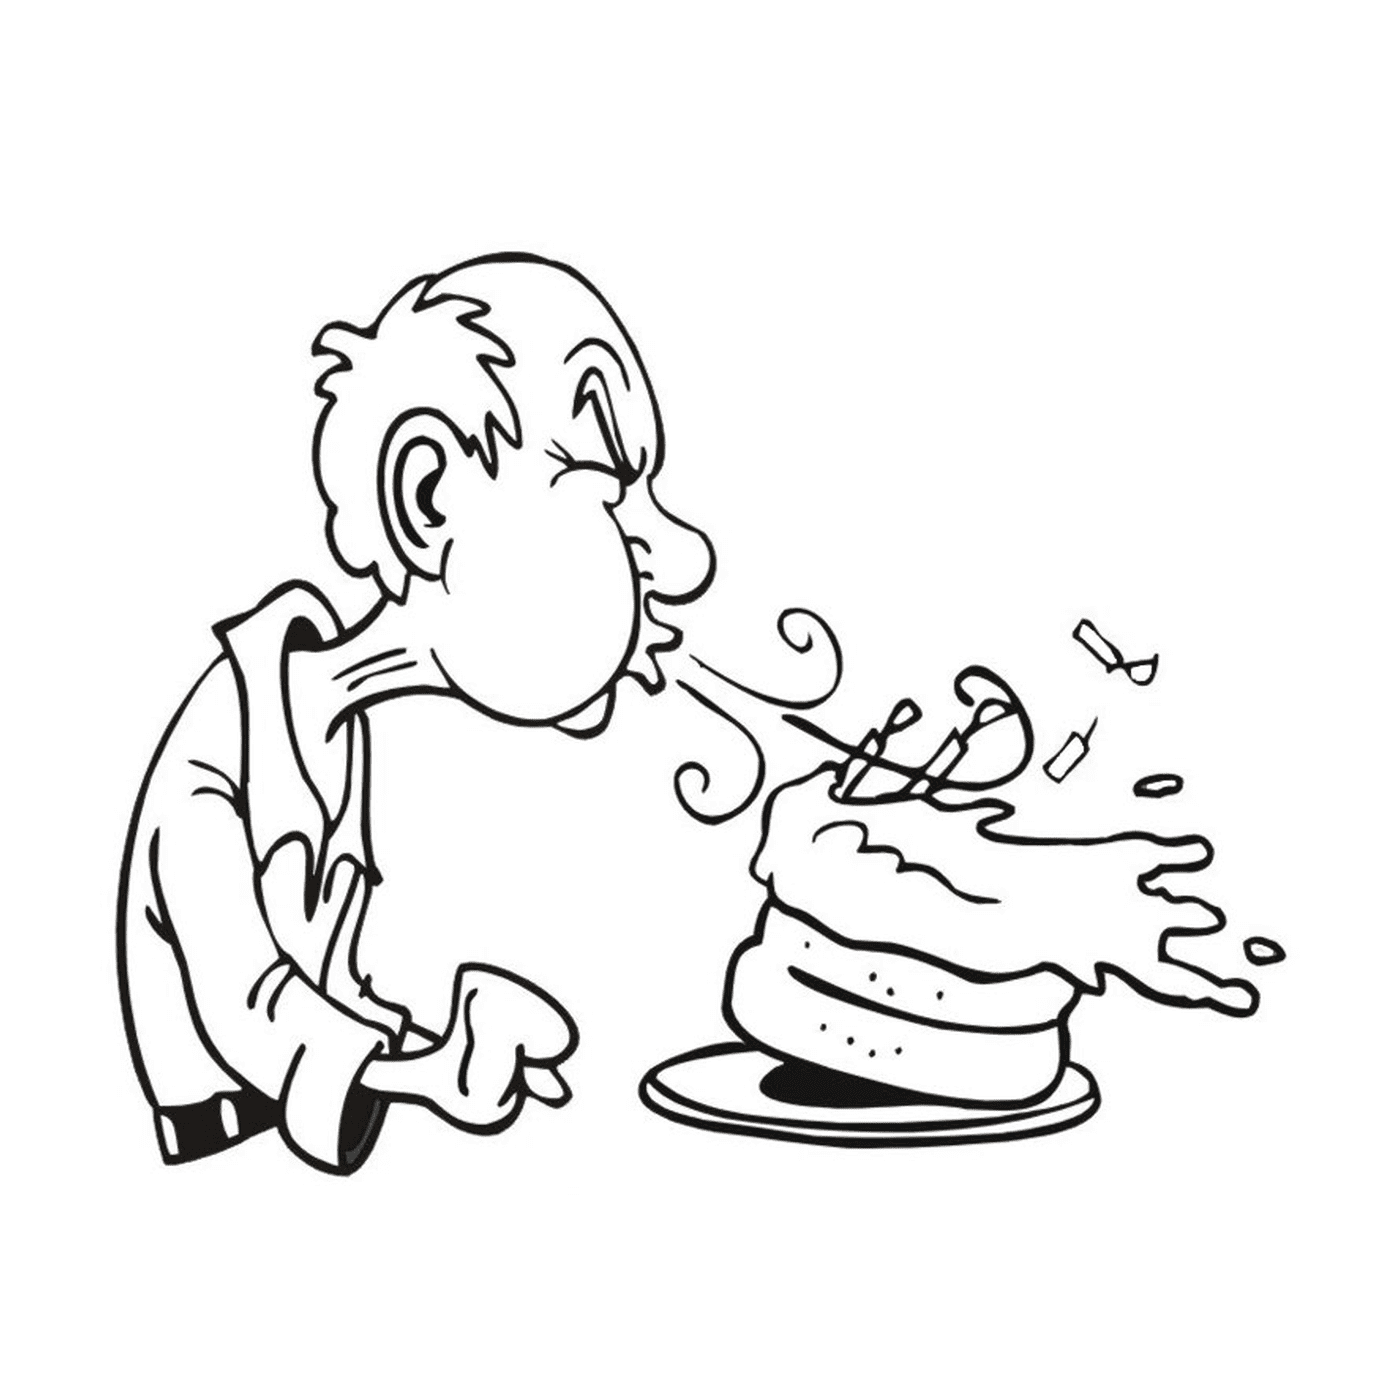  Человек задувает свечу на торт 